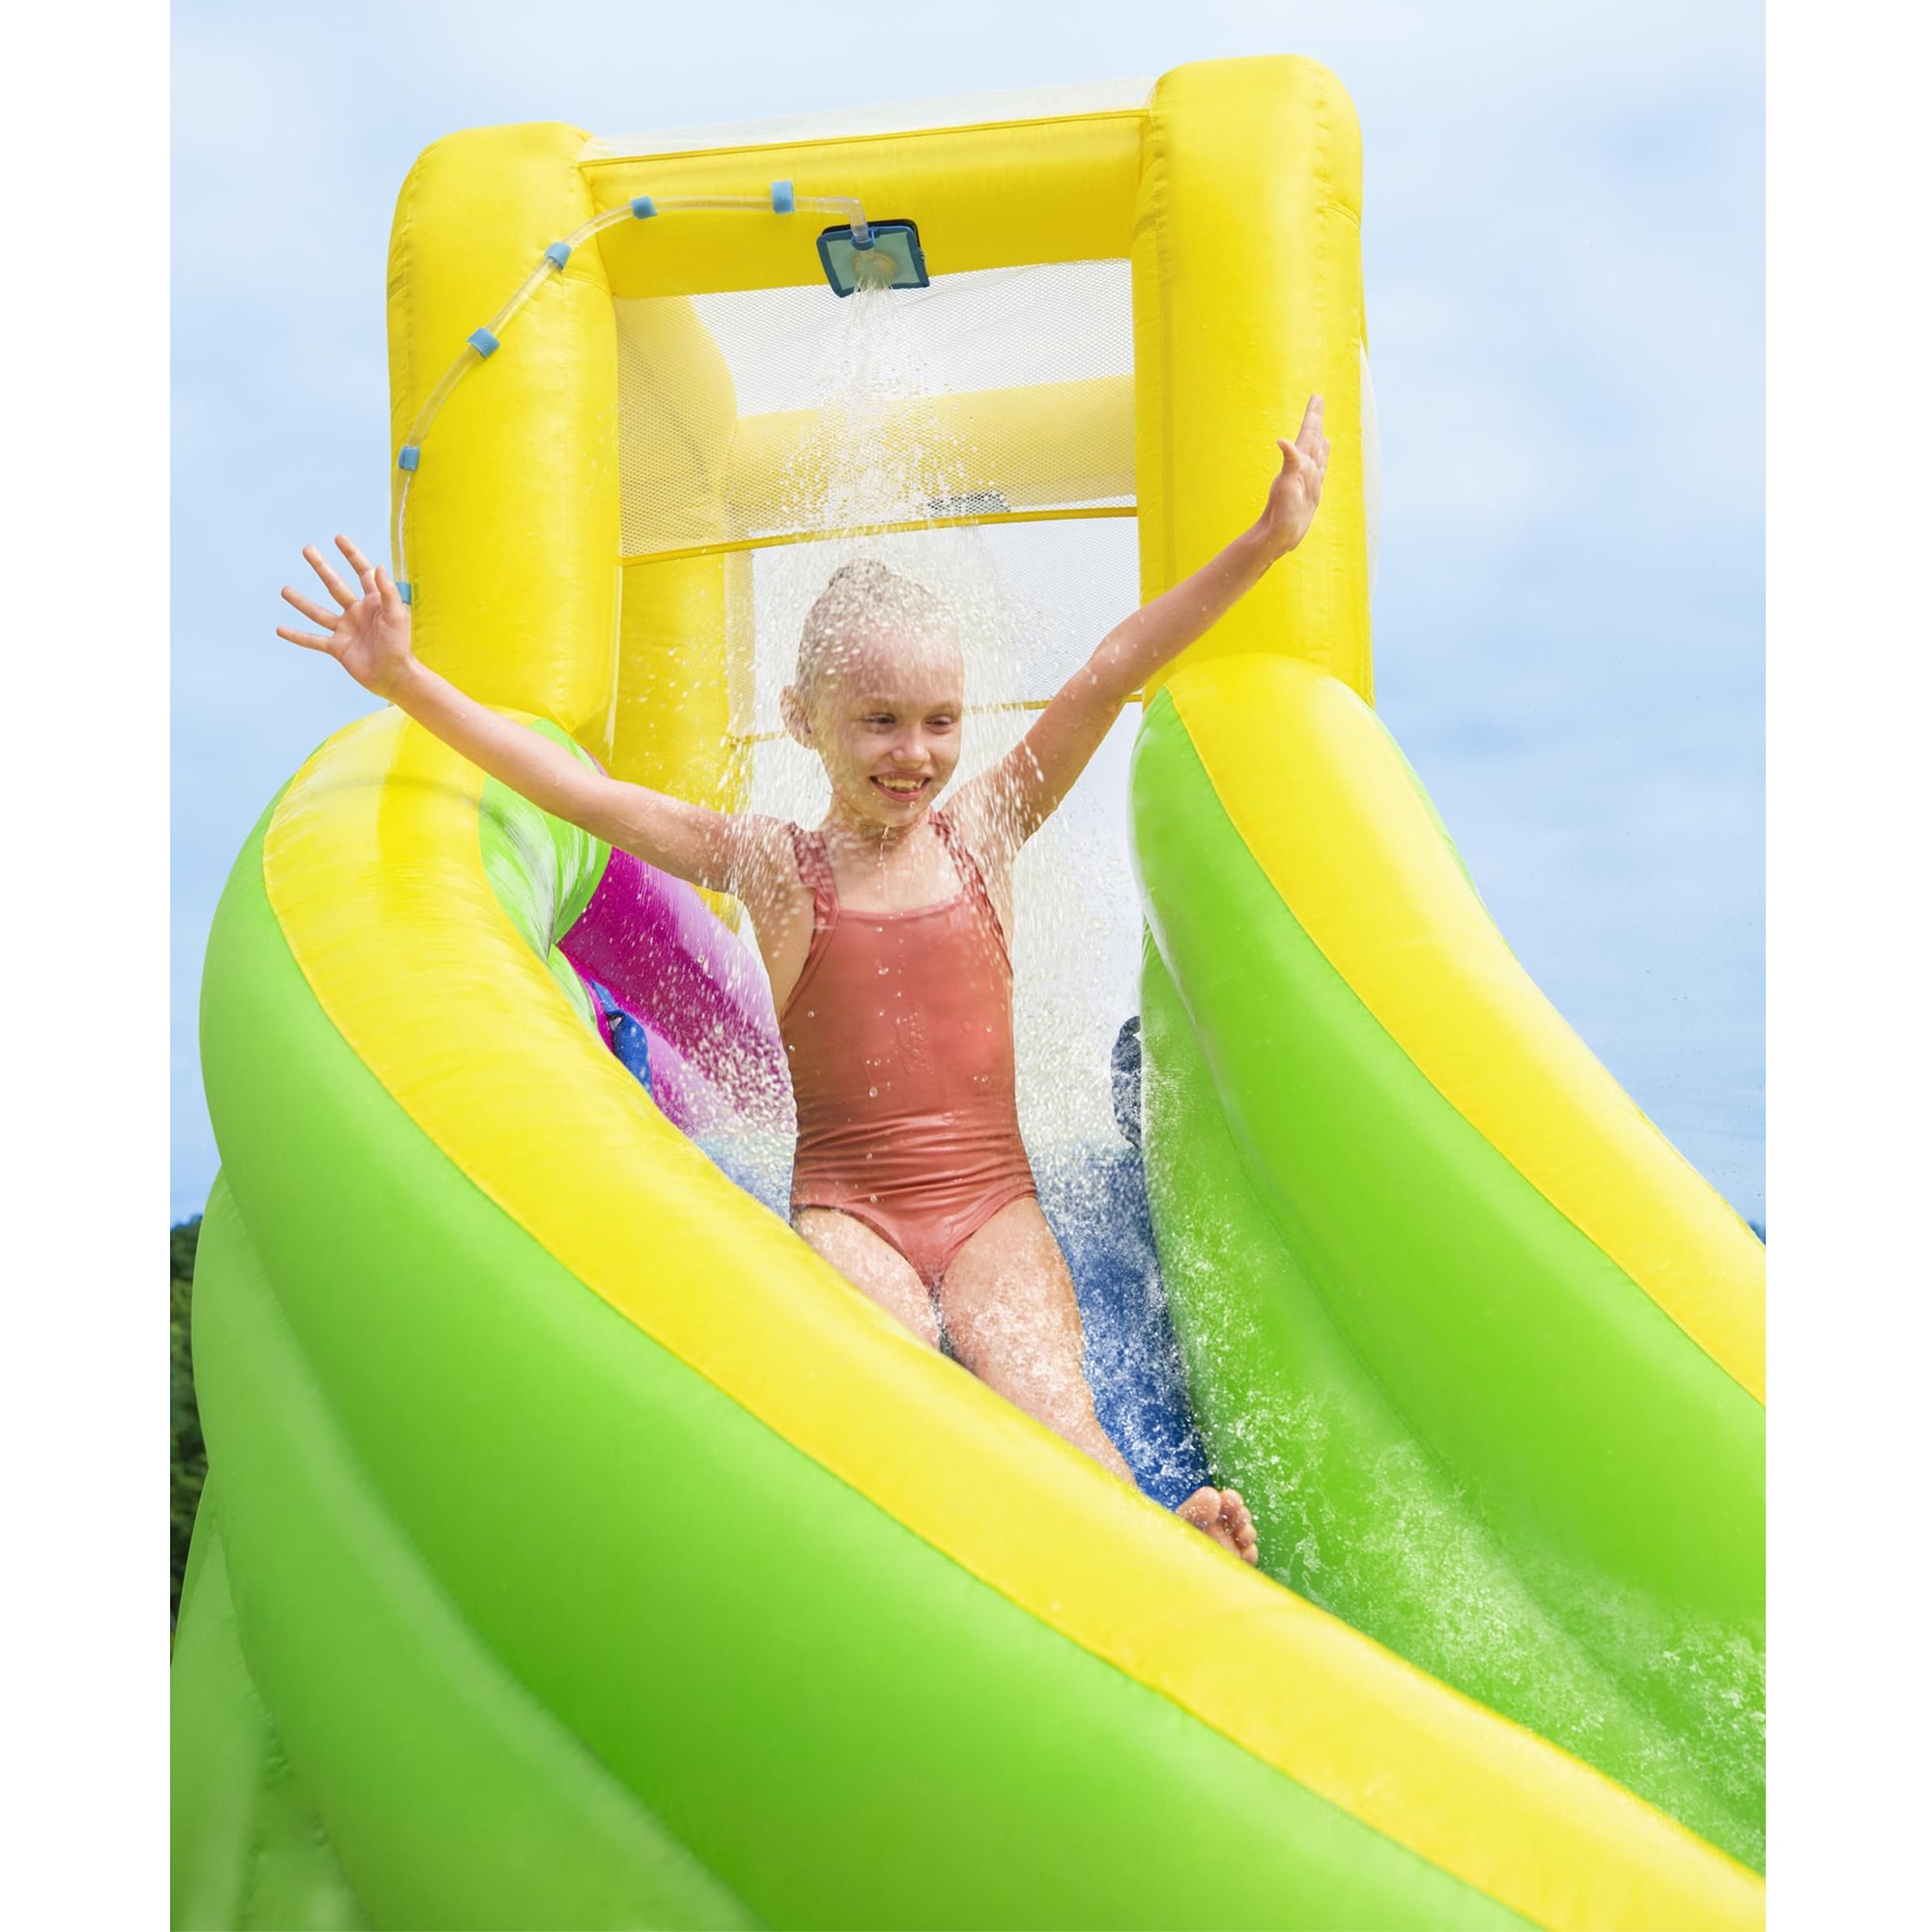 Bestway Multicolor Inflatable Slide with Splash Pool, Climbing